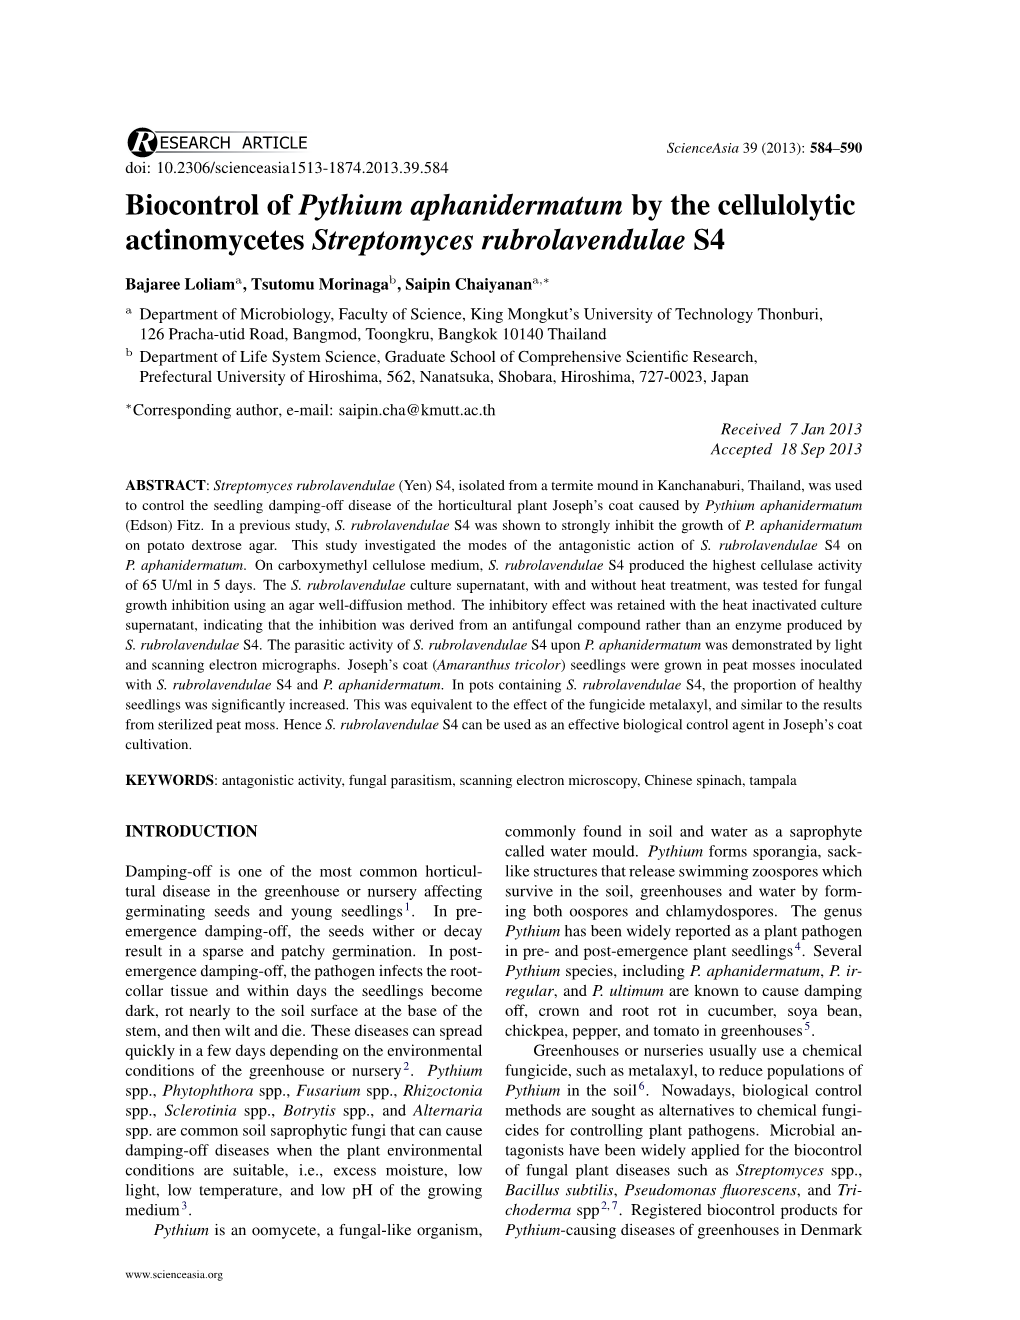 Biocontrol of Pythium Aphanidermatum by the Cellulolytic Actinomycetes Streptomyces Rubrolavendulae S4